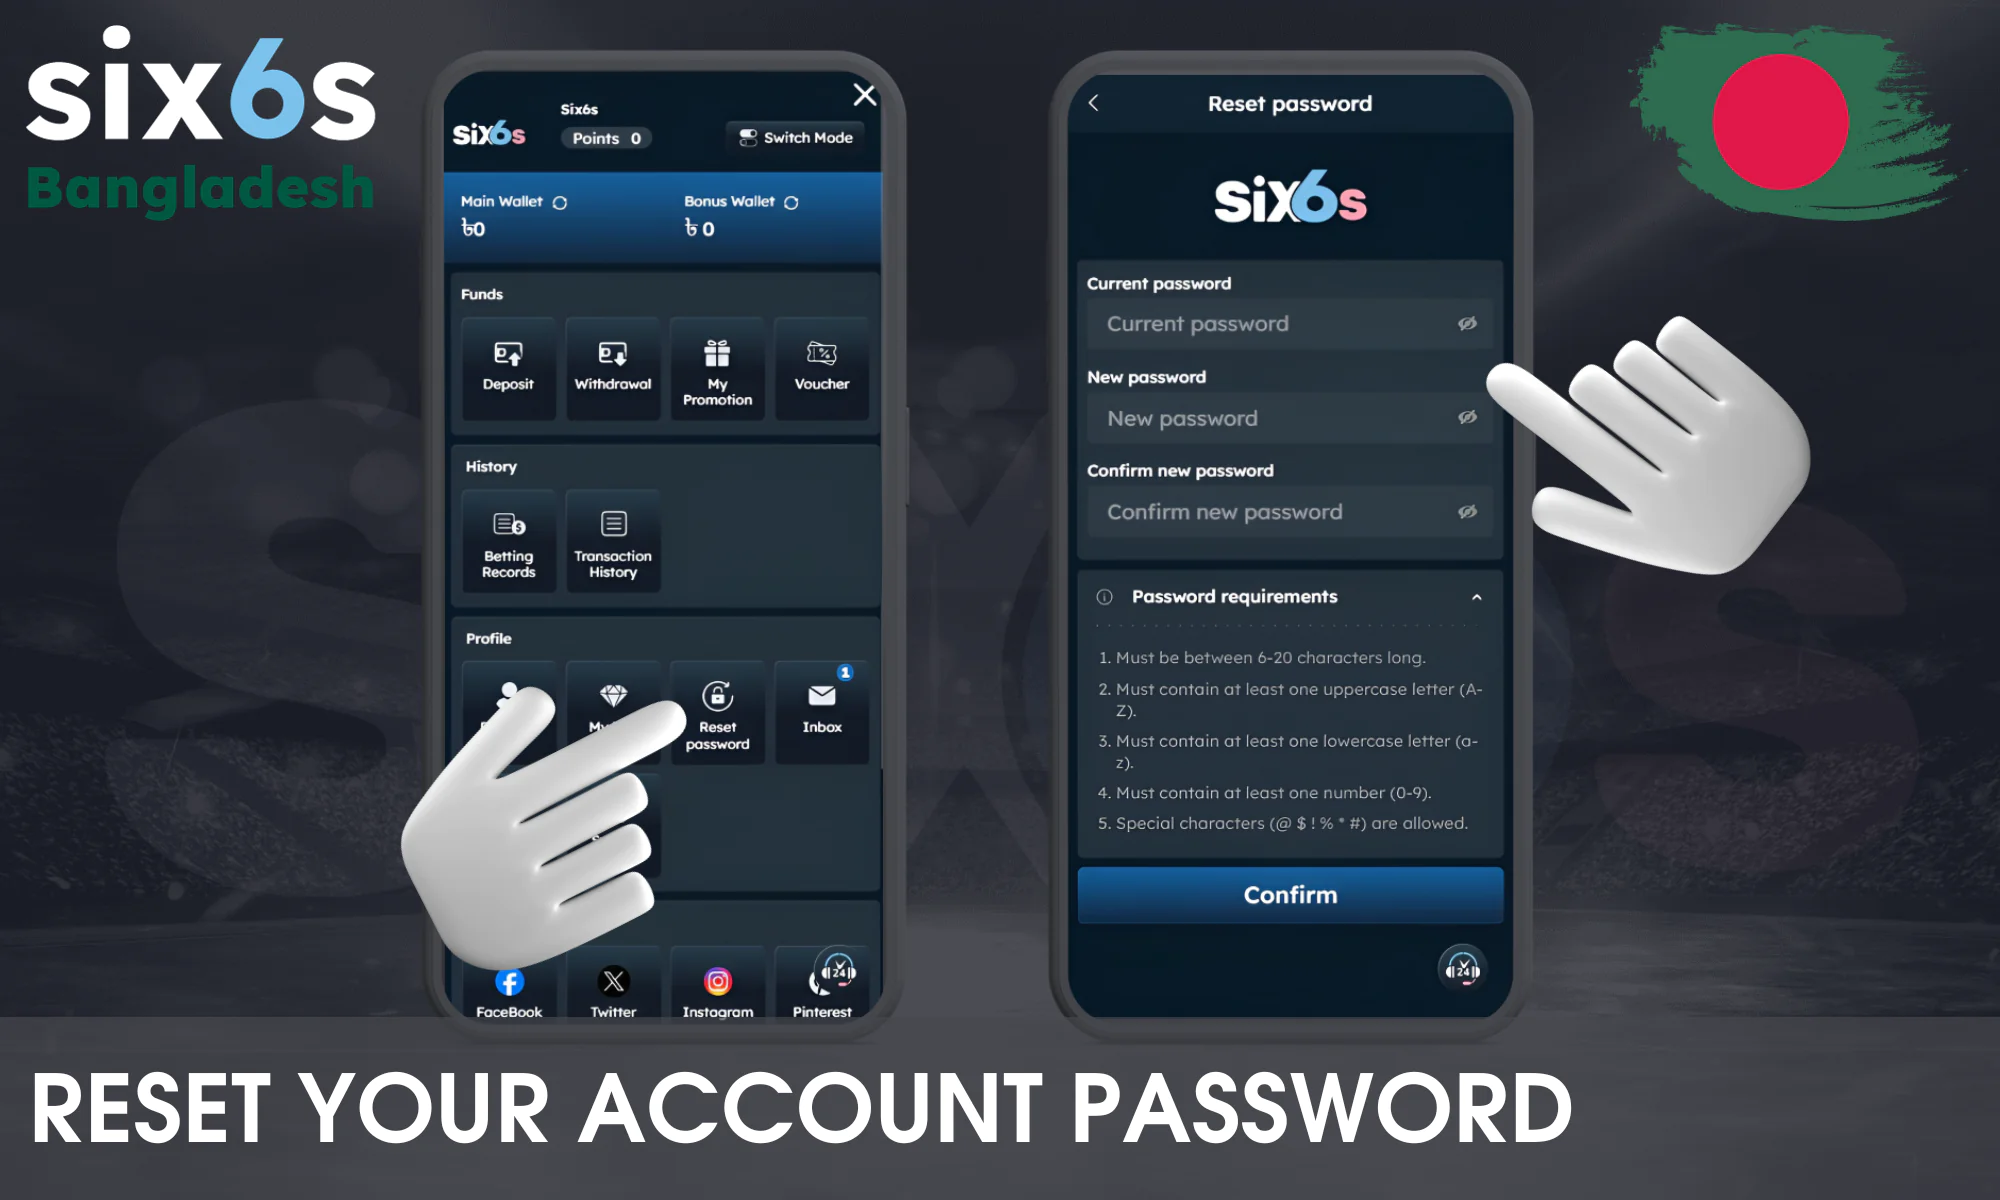 How to reset your Six6s account password